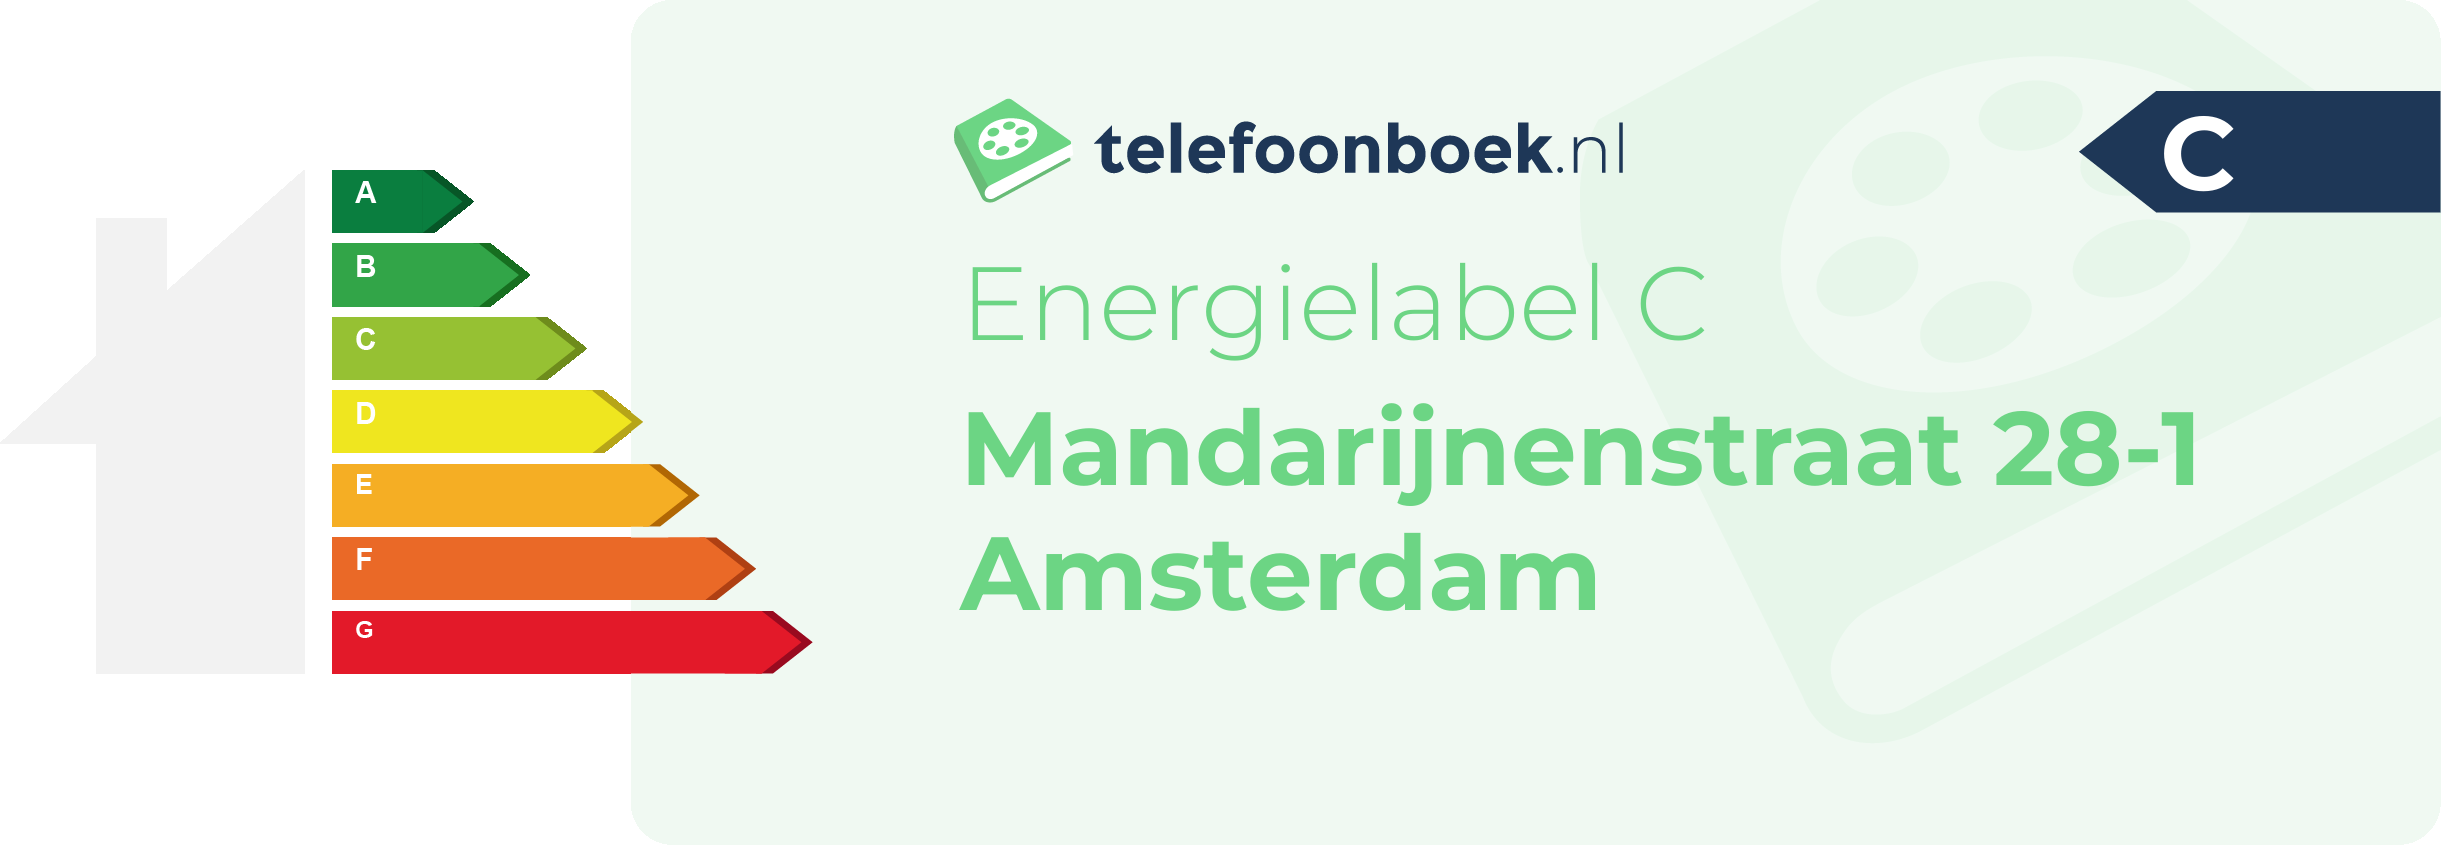 Energielabel Mandarijnenstraat 28-1 Amsterdam